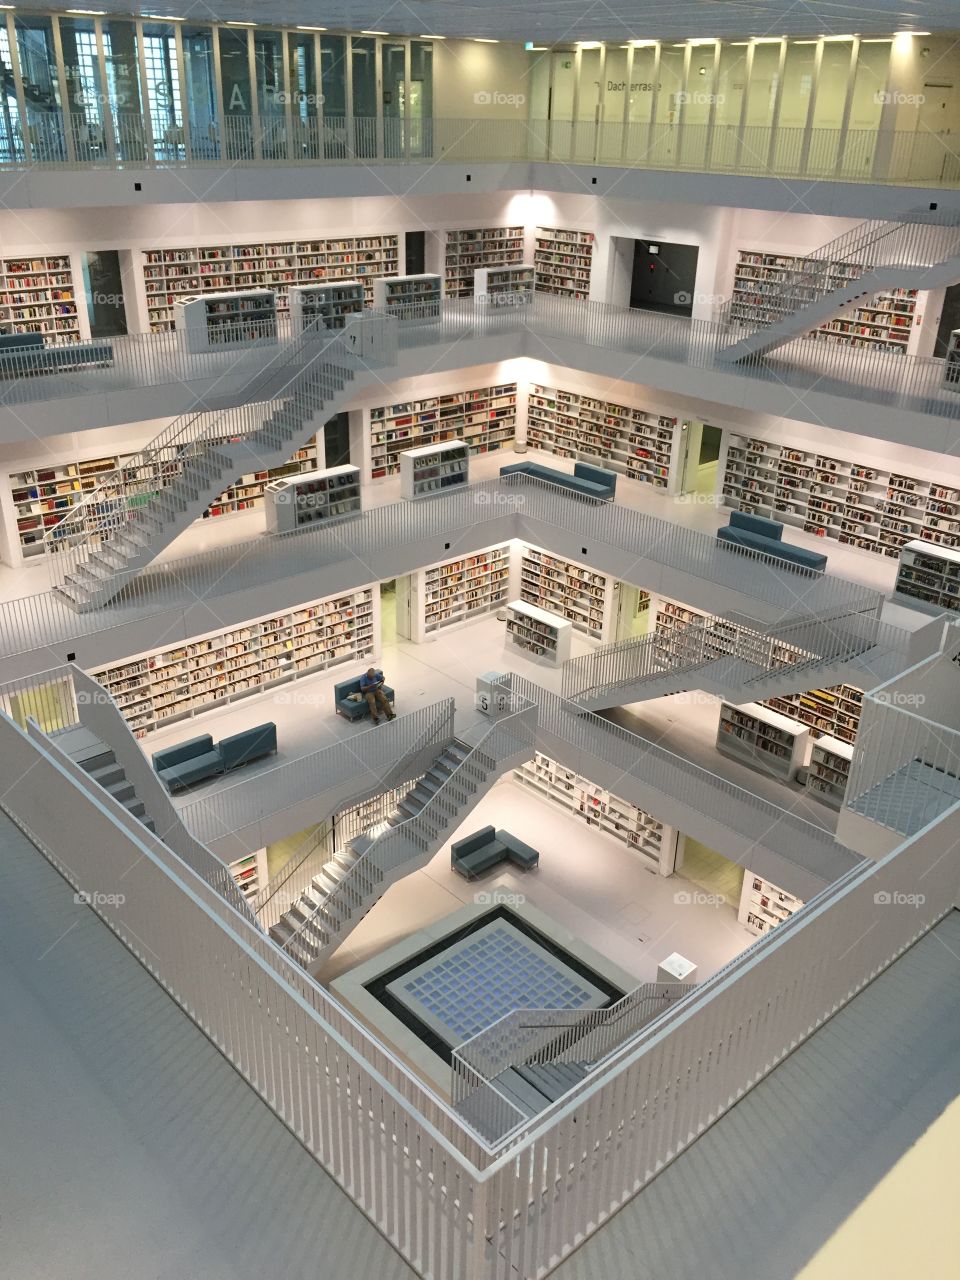 Stuttgat library